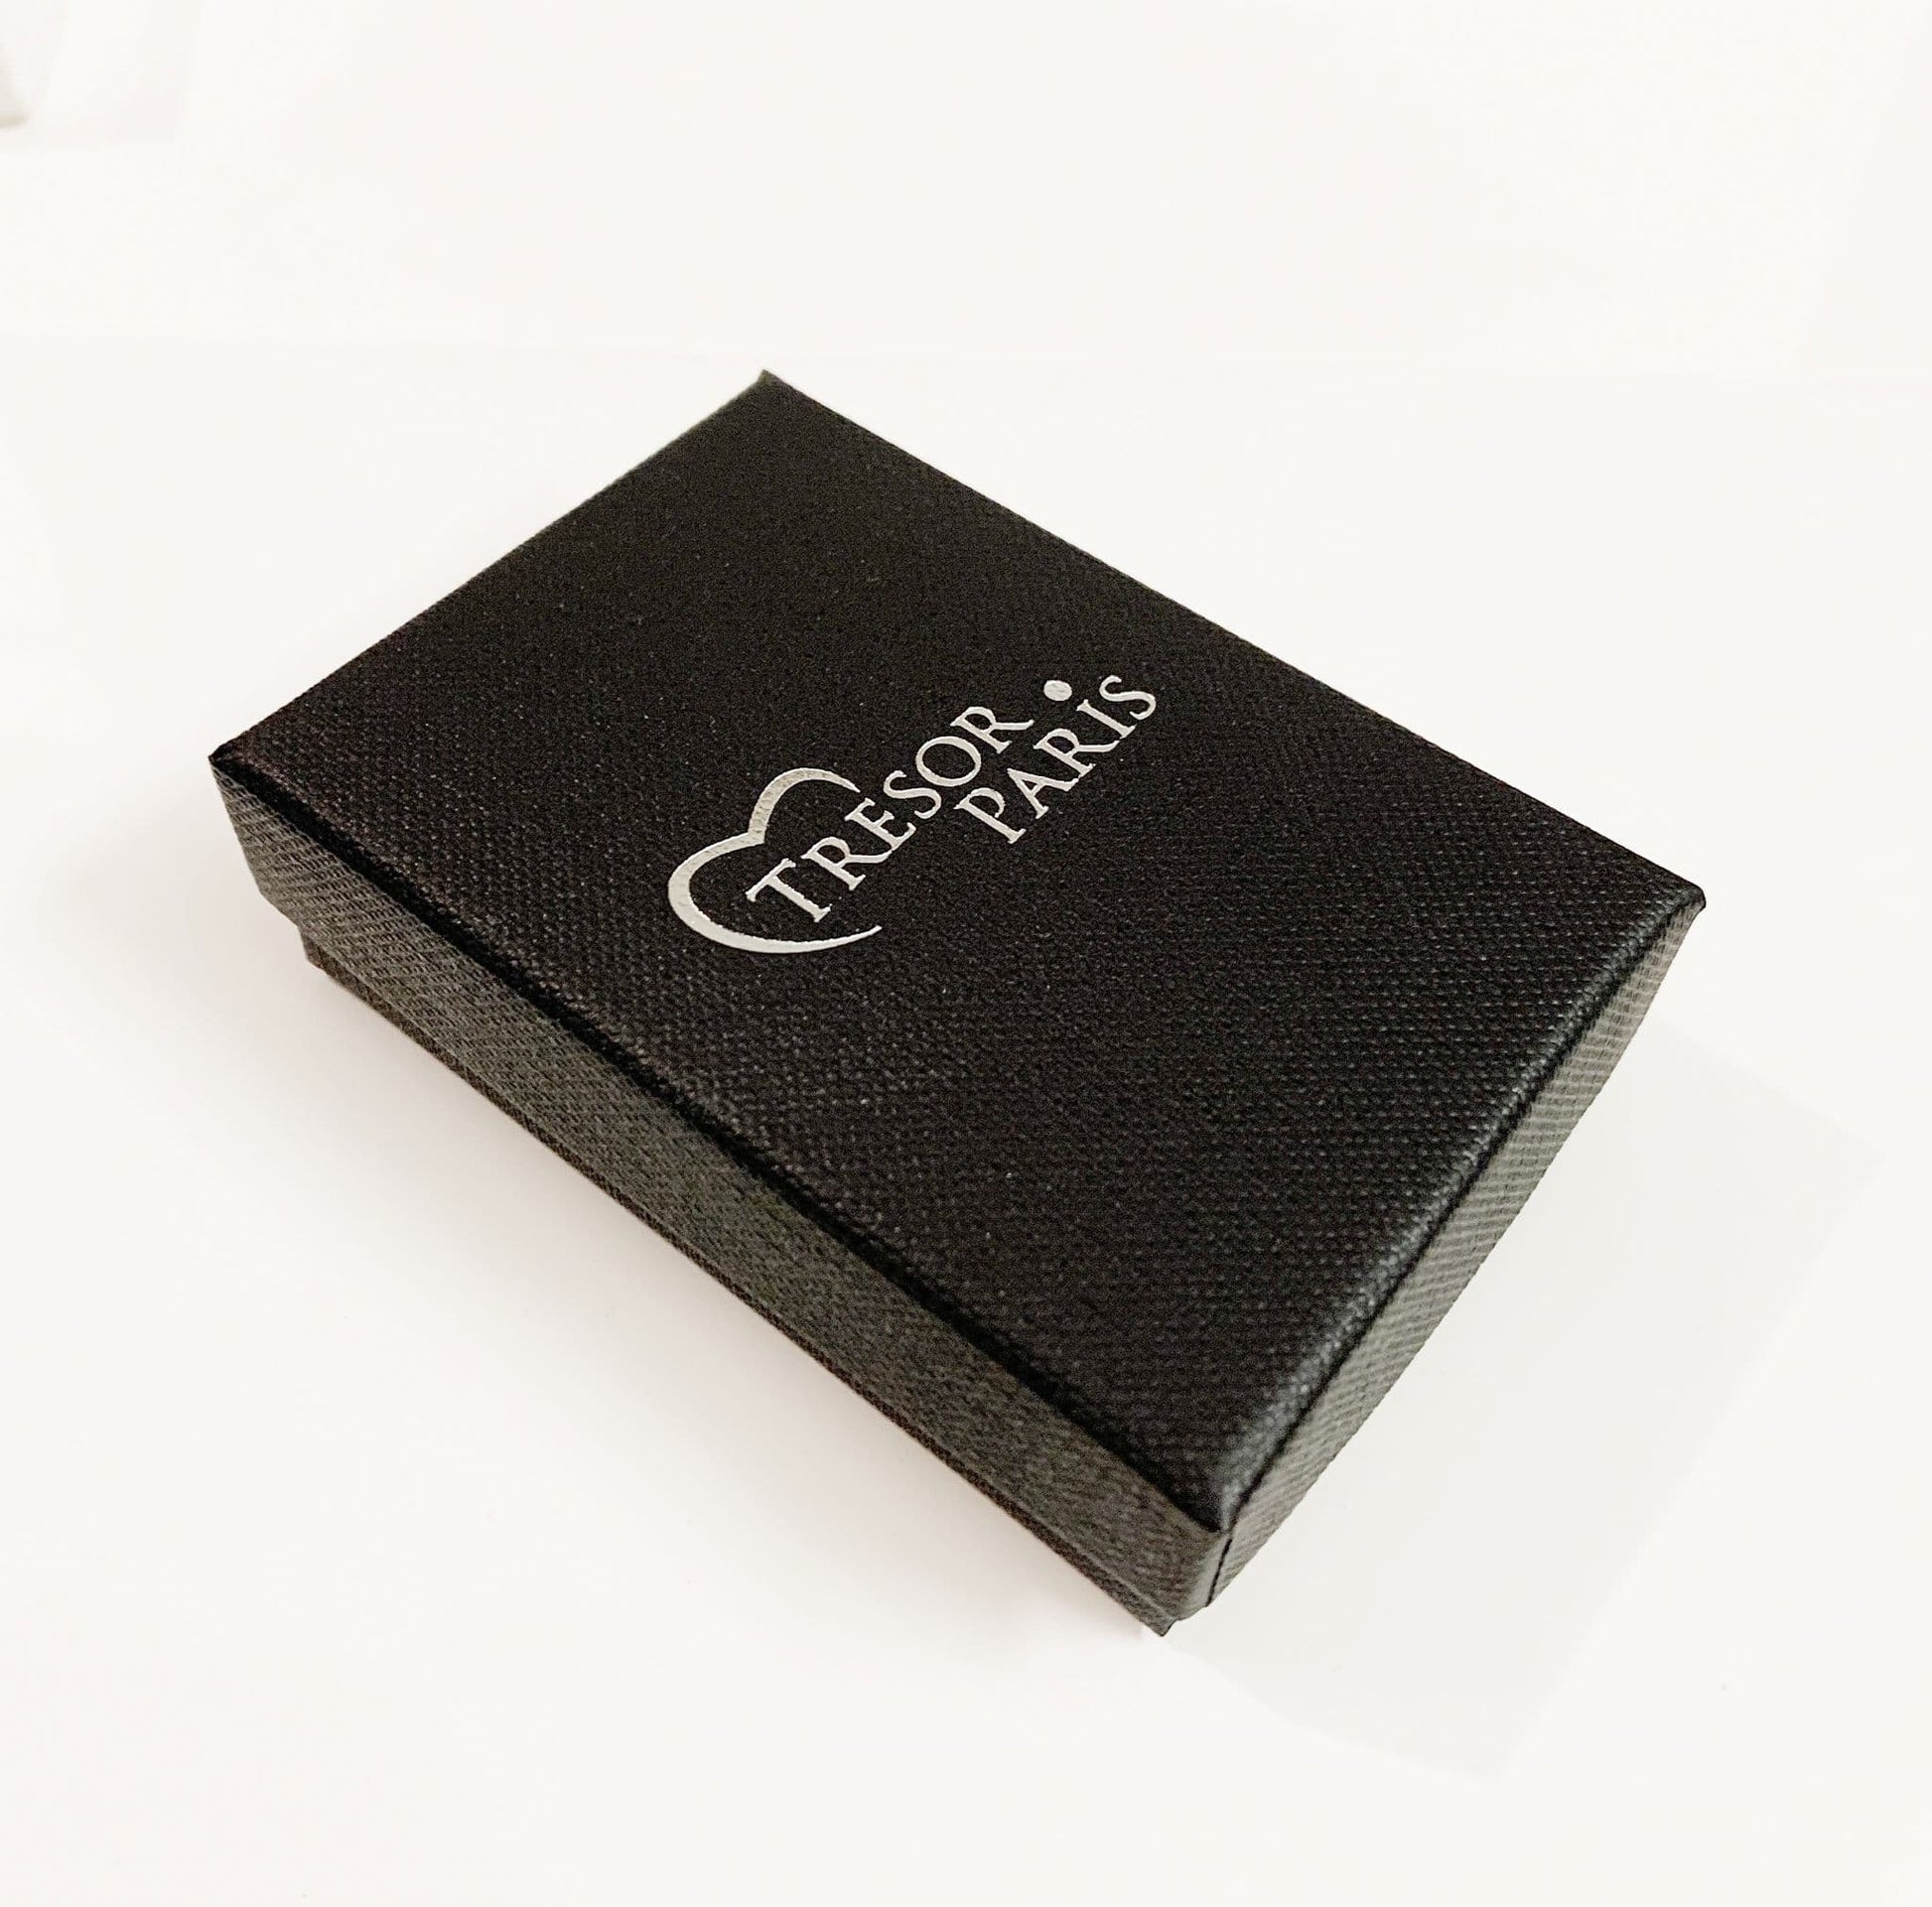 Tresor Paris gift box